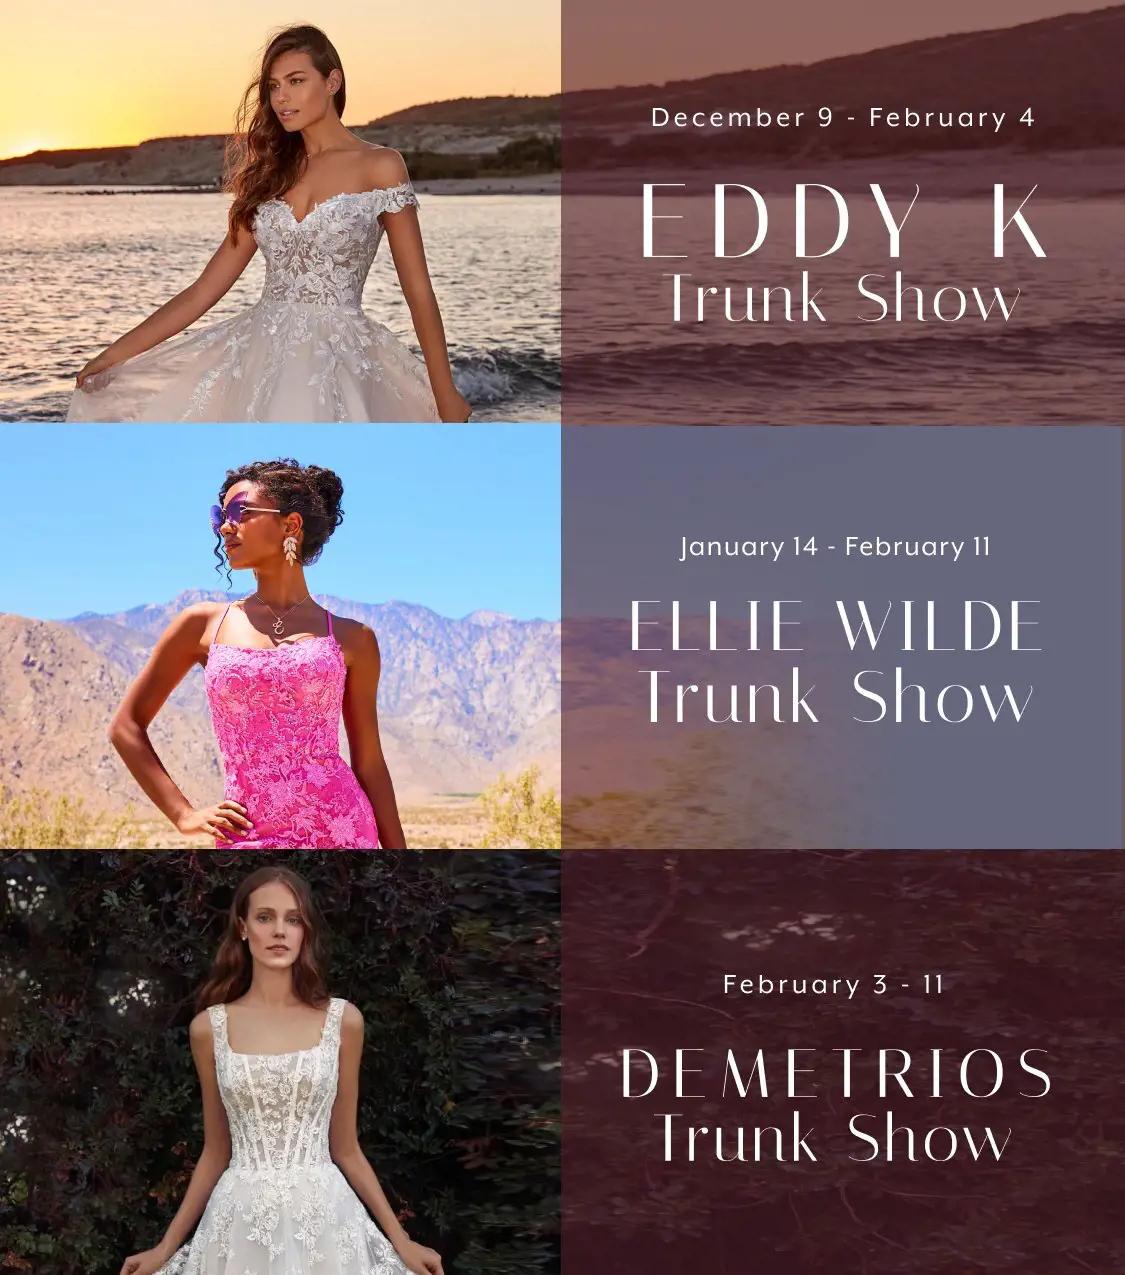 "Eddy K Trunk Show, Ellie Wilde Trunk Show, Demetrios Trunk Show" banner for mobile